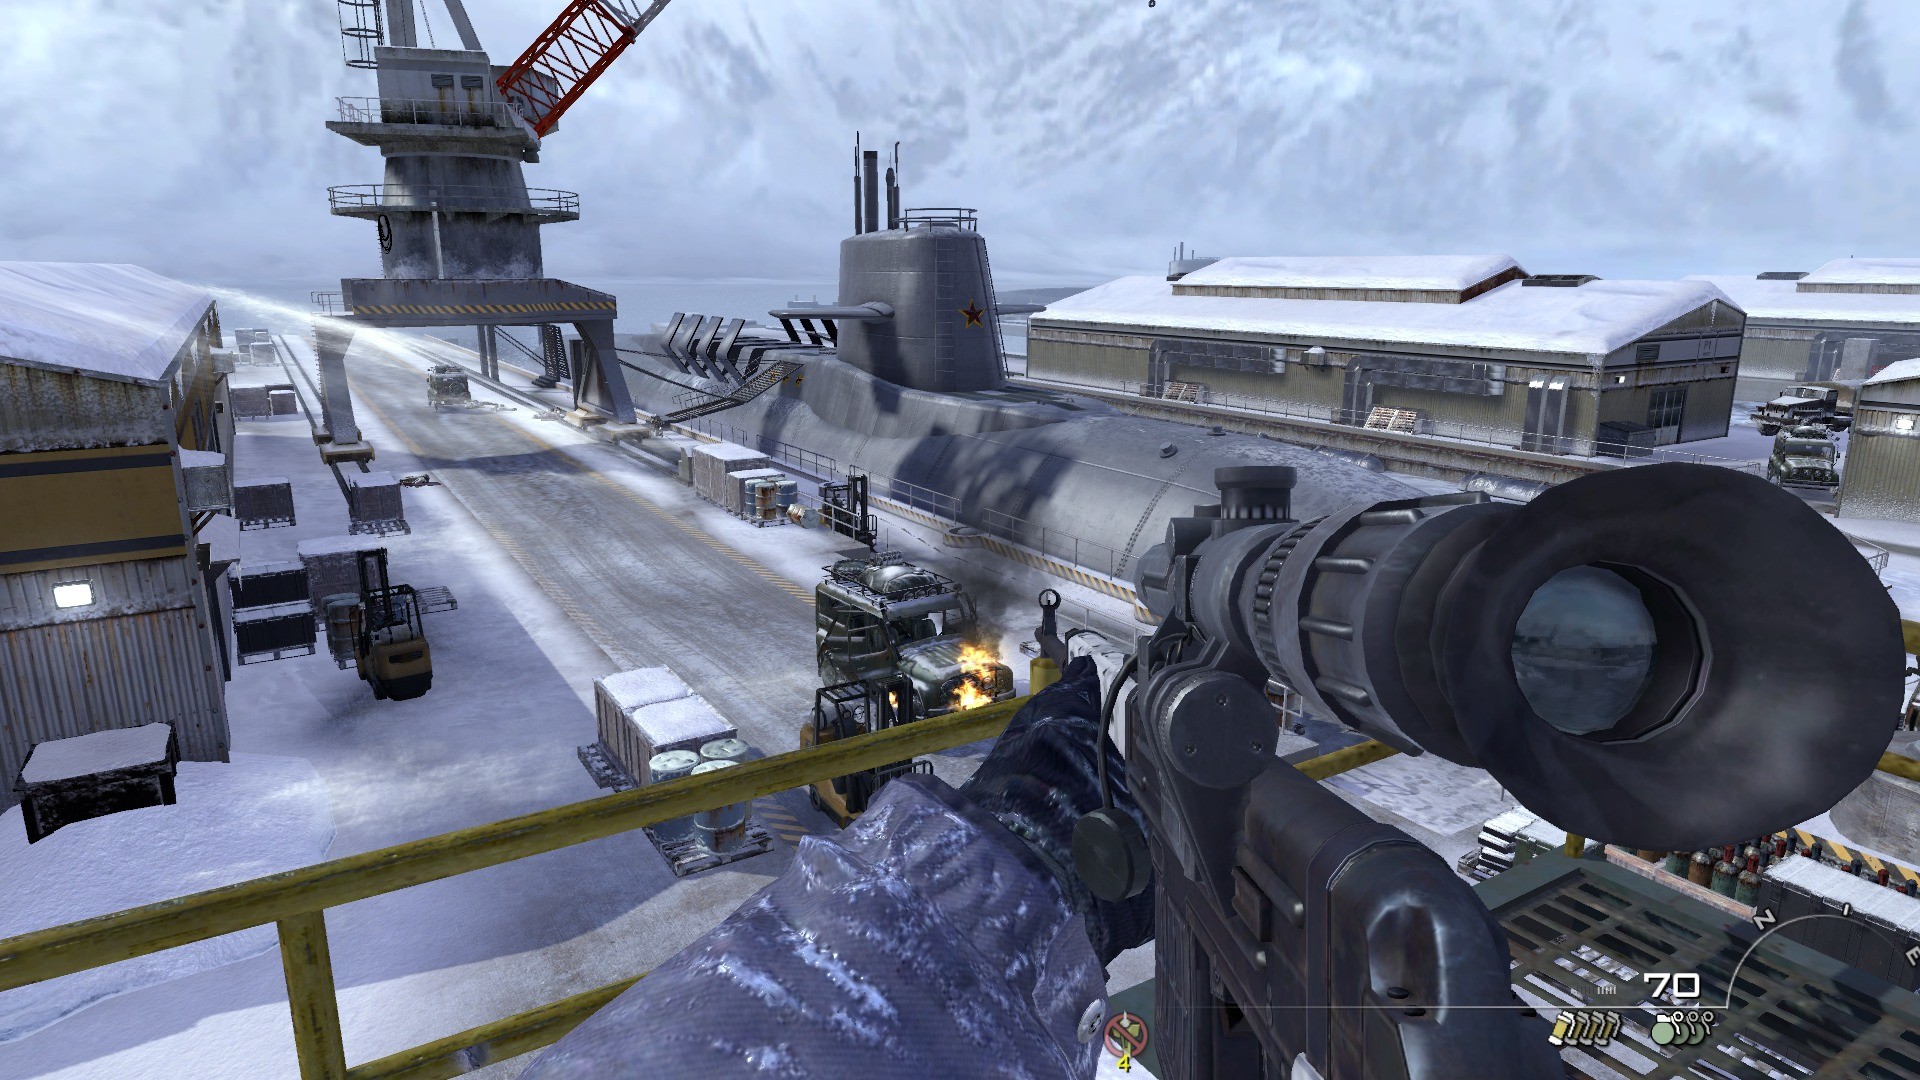 1920x1080 Call of Duty Modern Warfare 2 screenshots on PC,  2aa, max  settings, click to enlarge